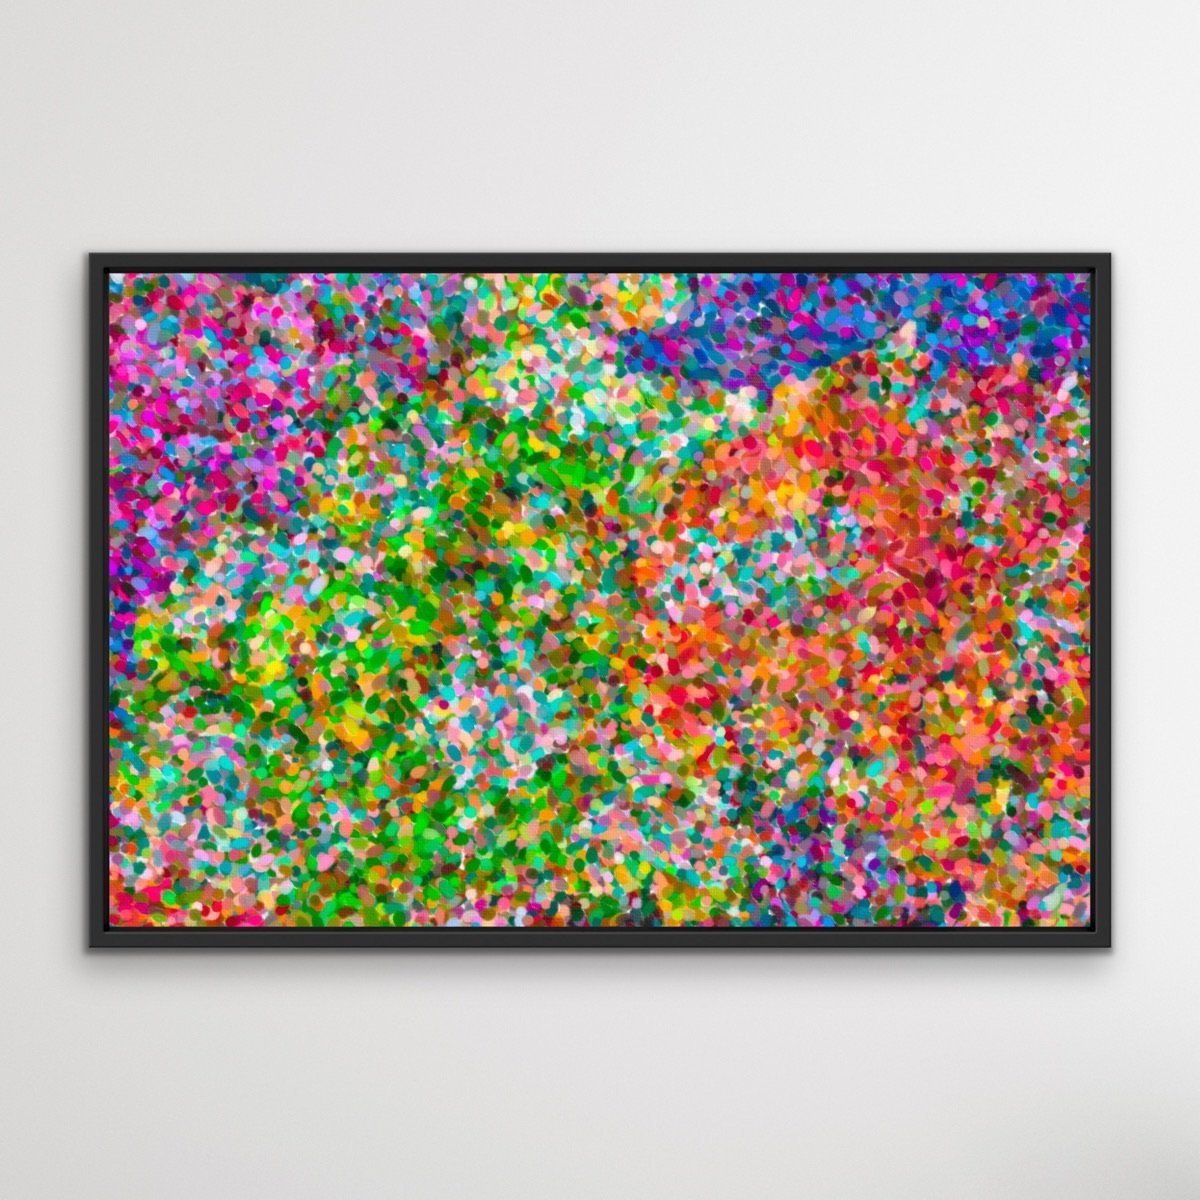 Sky High - Bright Colourful Mountain Canvas and Paper Art Print - I Heart  Wall Art Australia